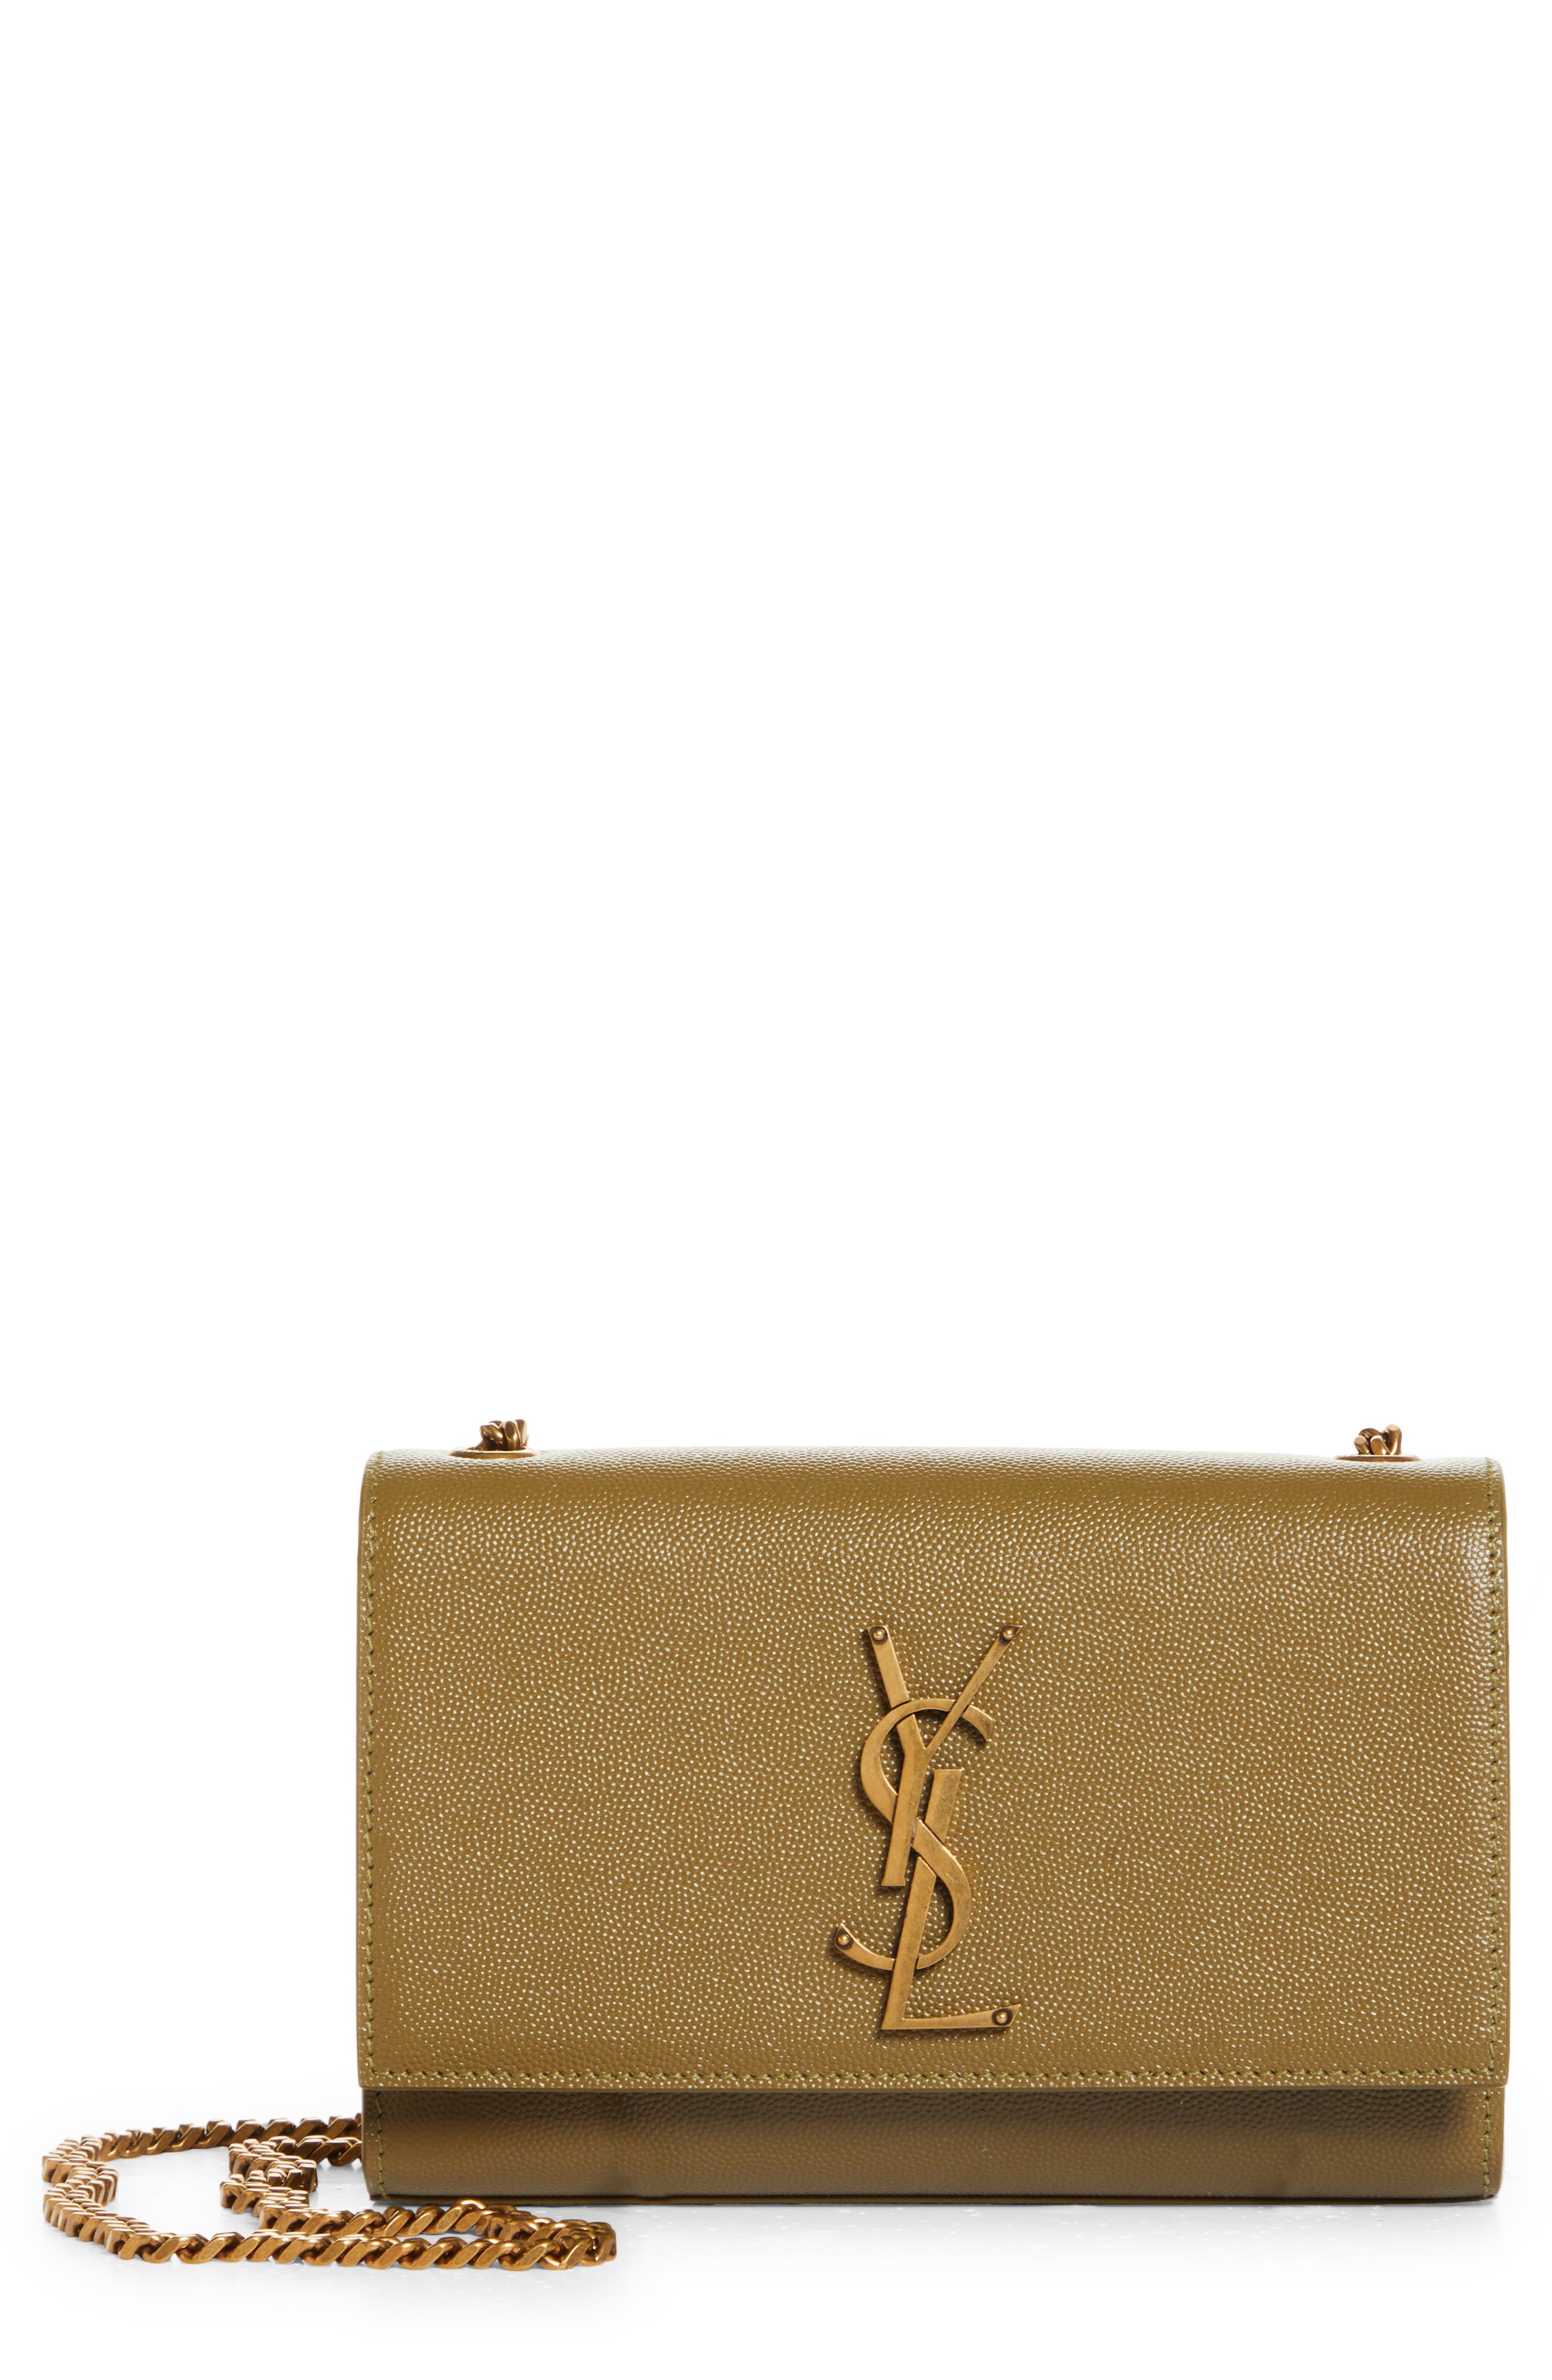 Saint Laurent Kate Small Chain- Tassel Leather Cross-body Bag